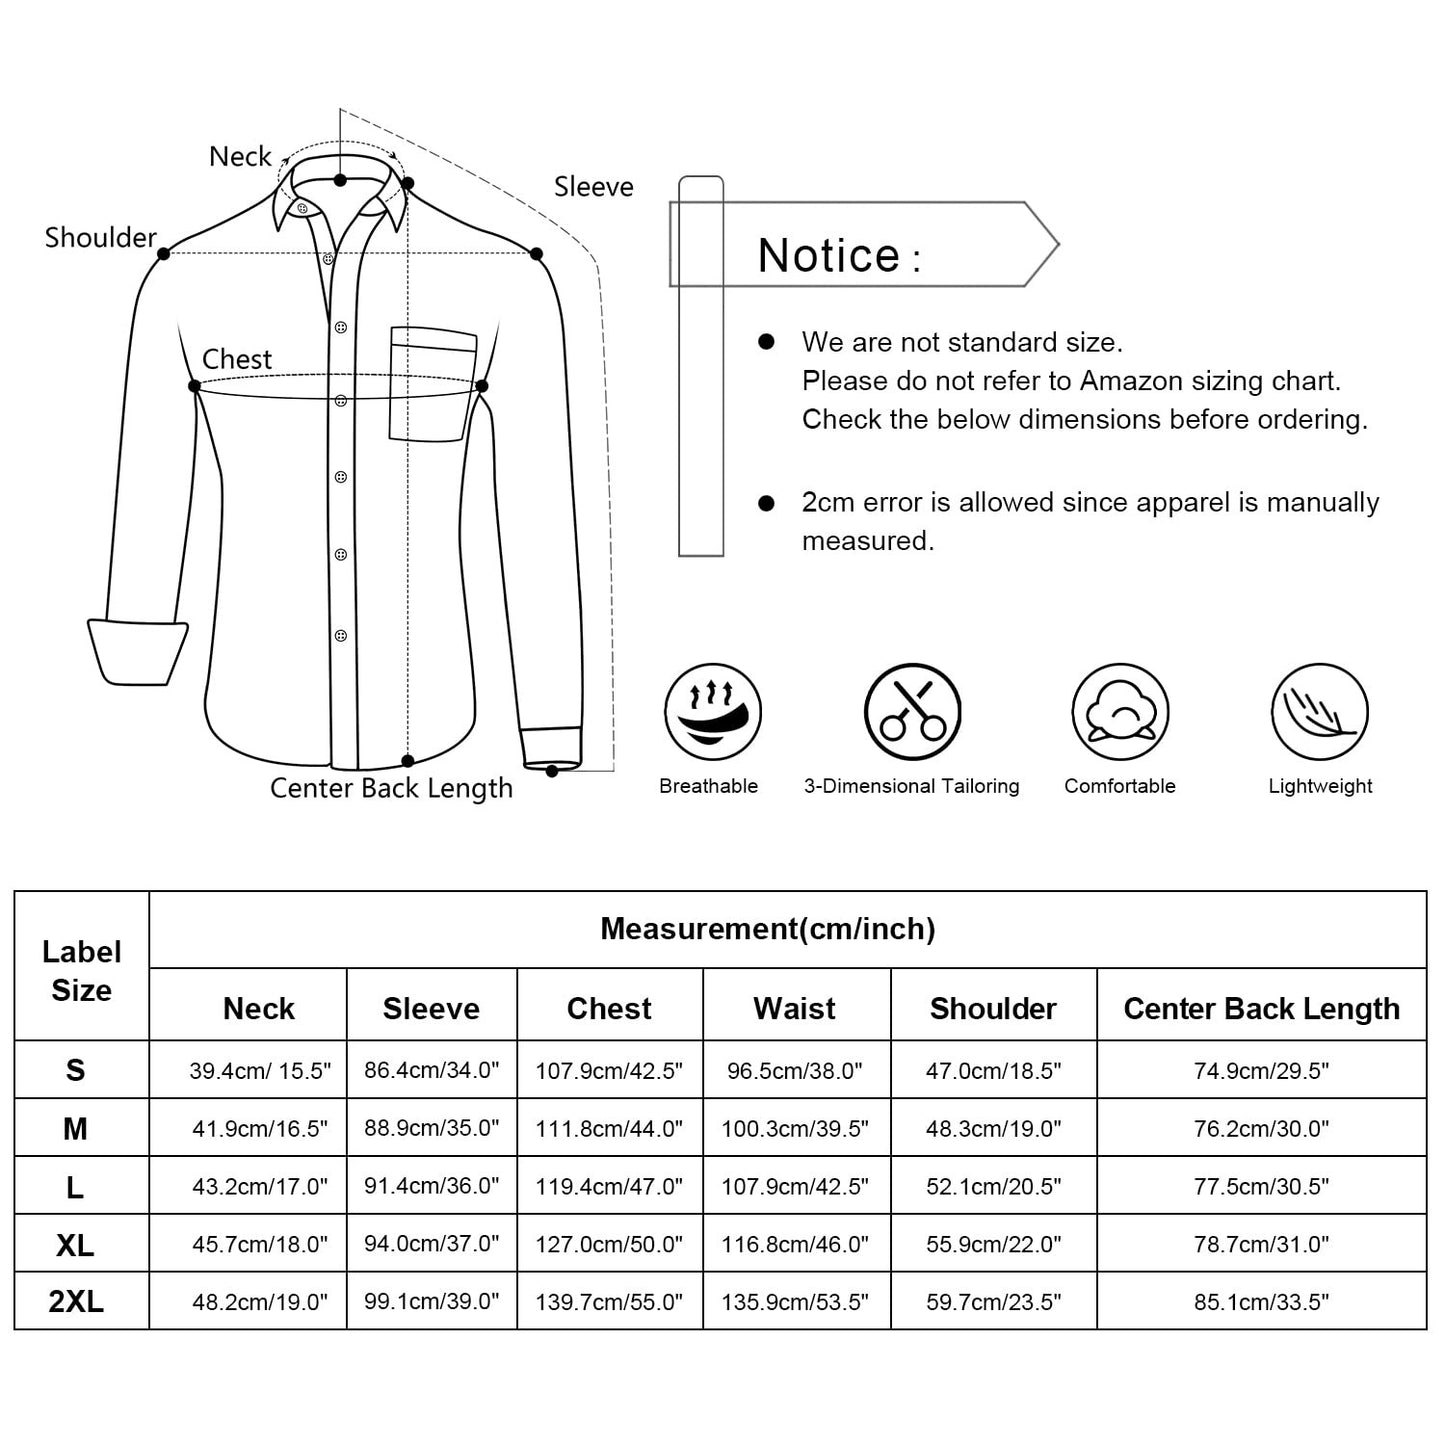 Men's Lapel Bronzing Shirt Casual Slim Fit Shiny Pattern Button-Down Long Sleeve Shirt, 009-Maroon Flower